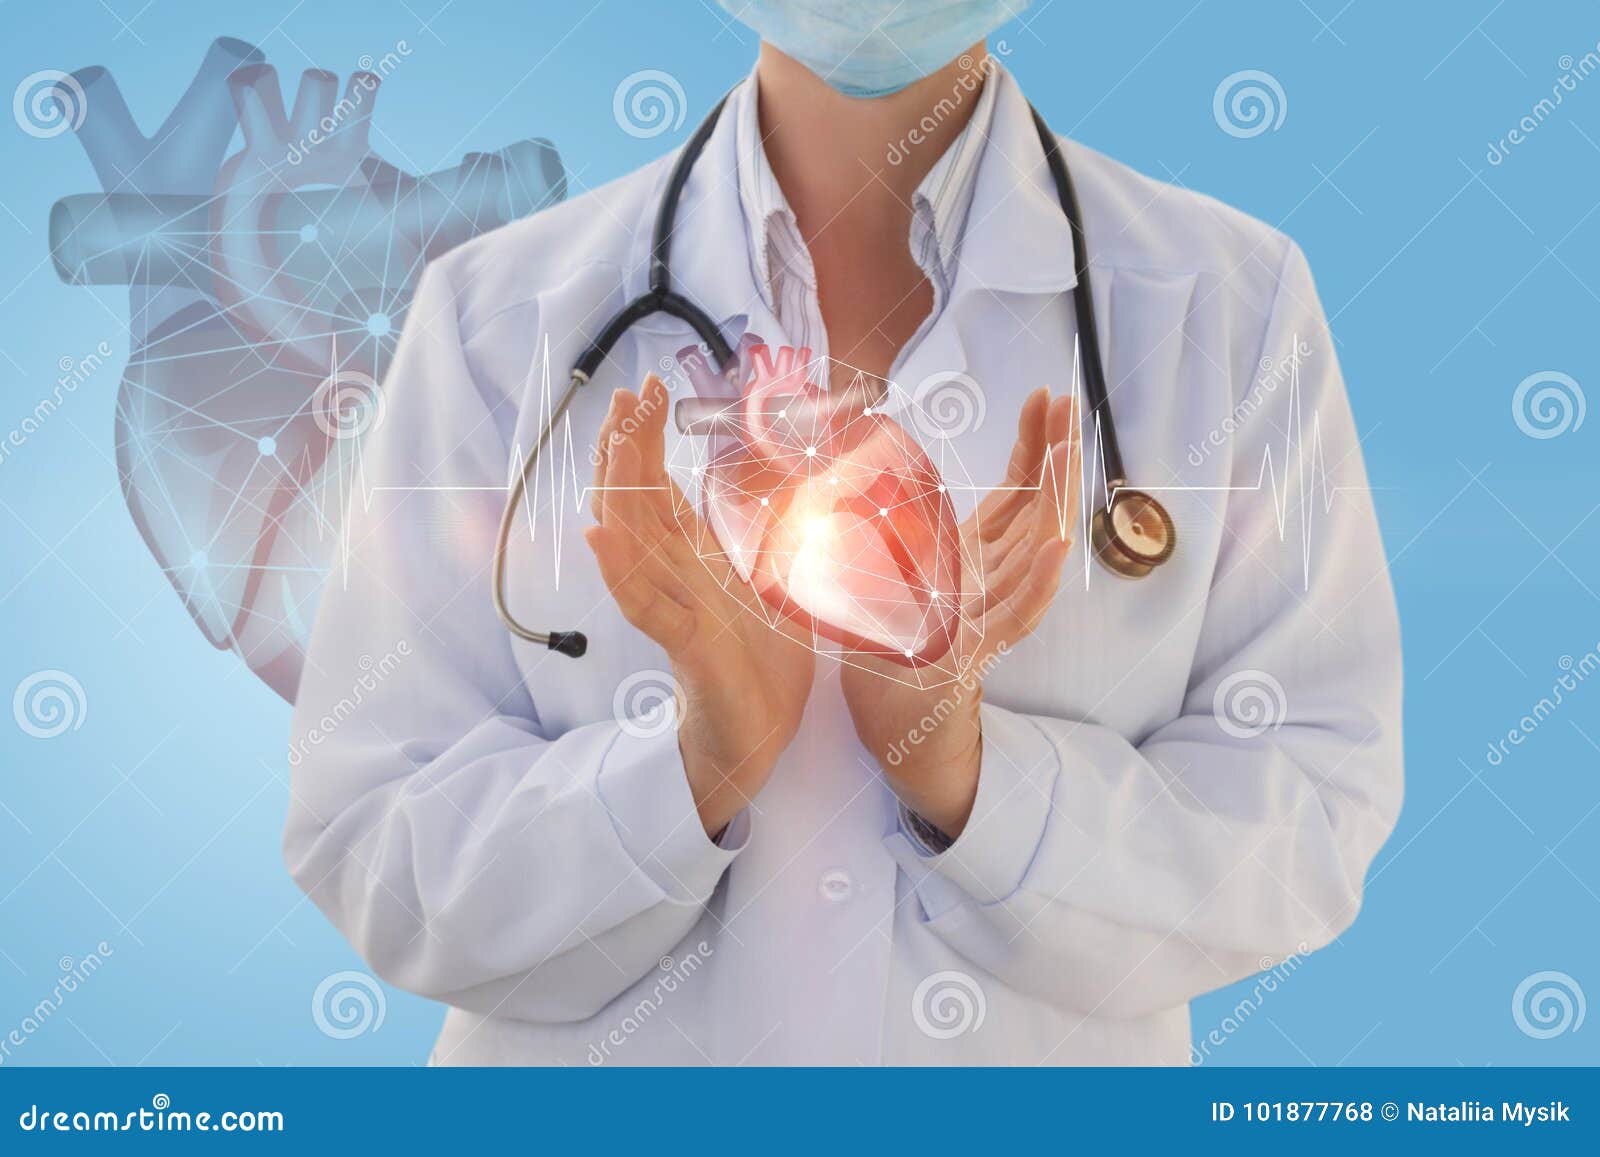 physician cardiologist shows a human heart .